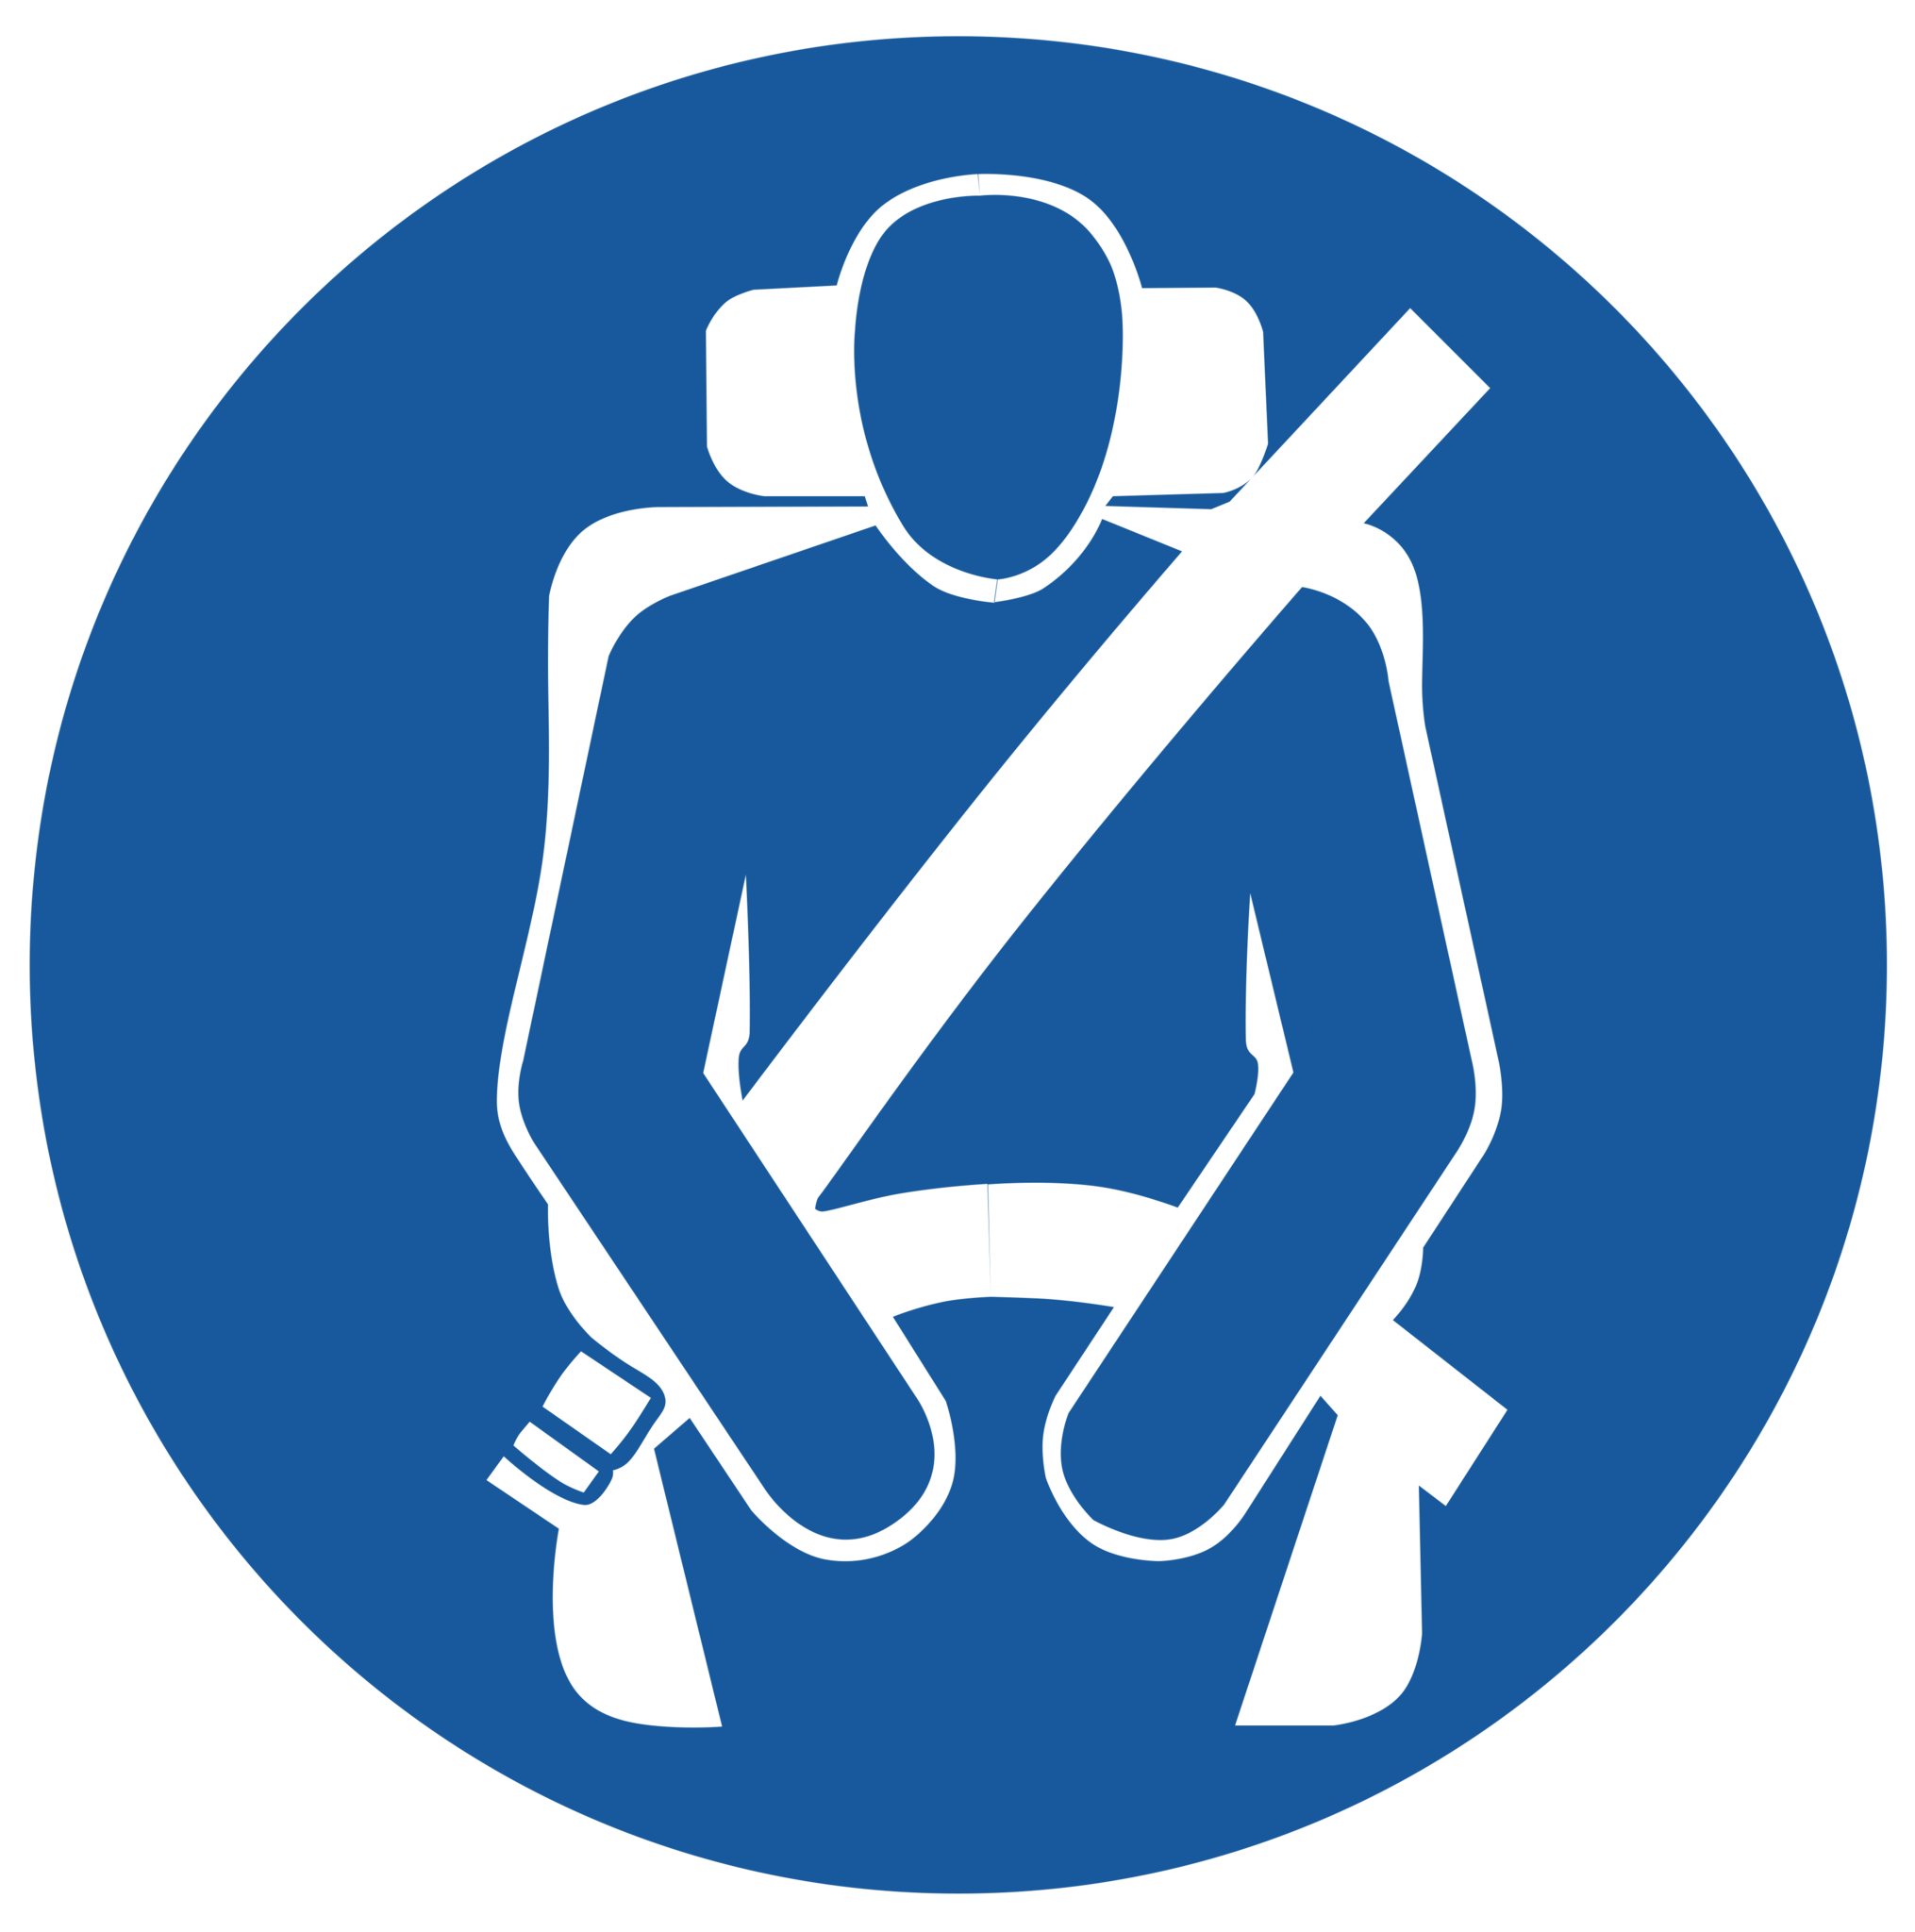 Знаки безопасности в автомобиле